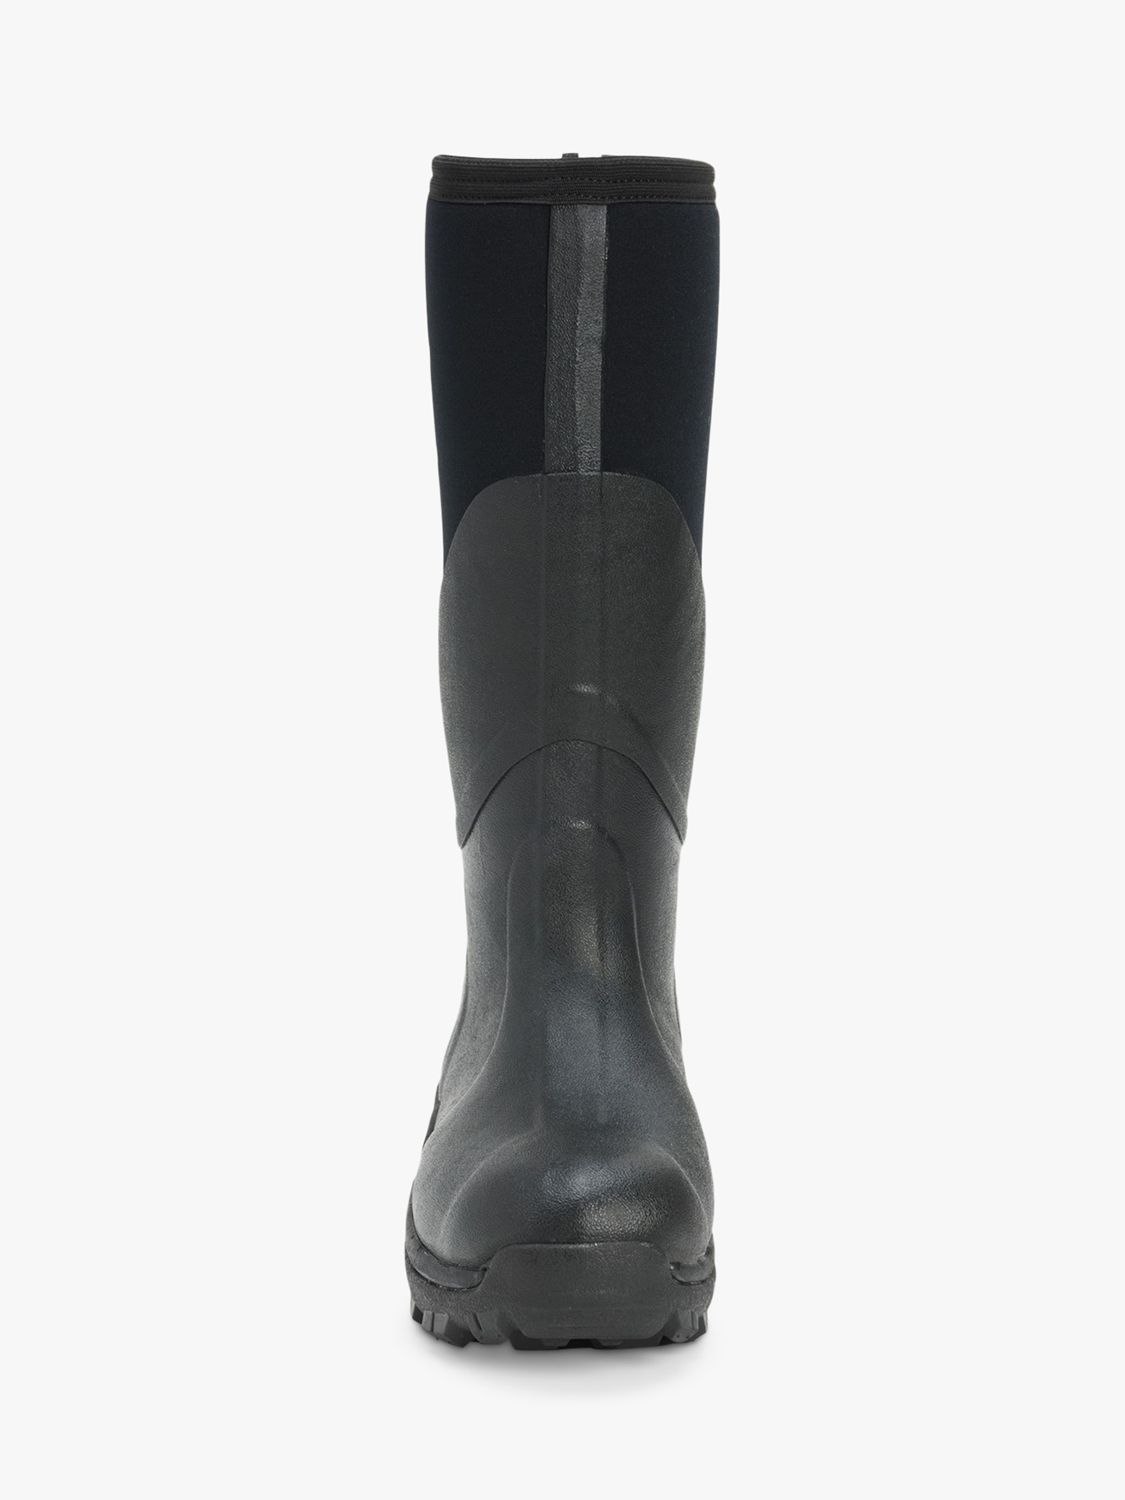 Muck Muckmaster Tall Wellington Boots, Black, 7